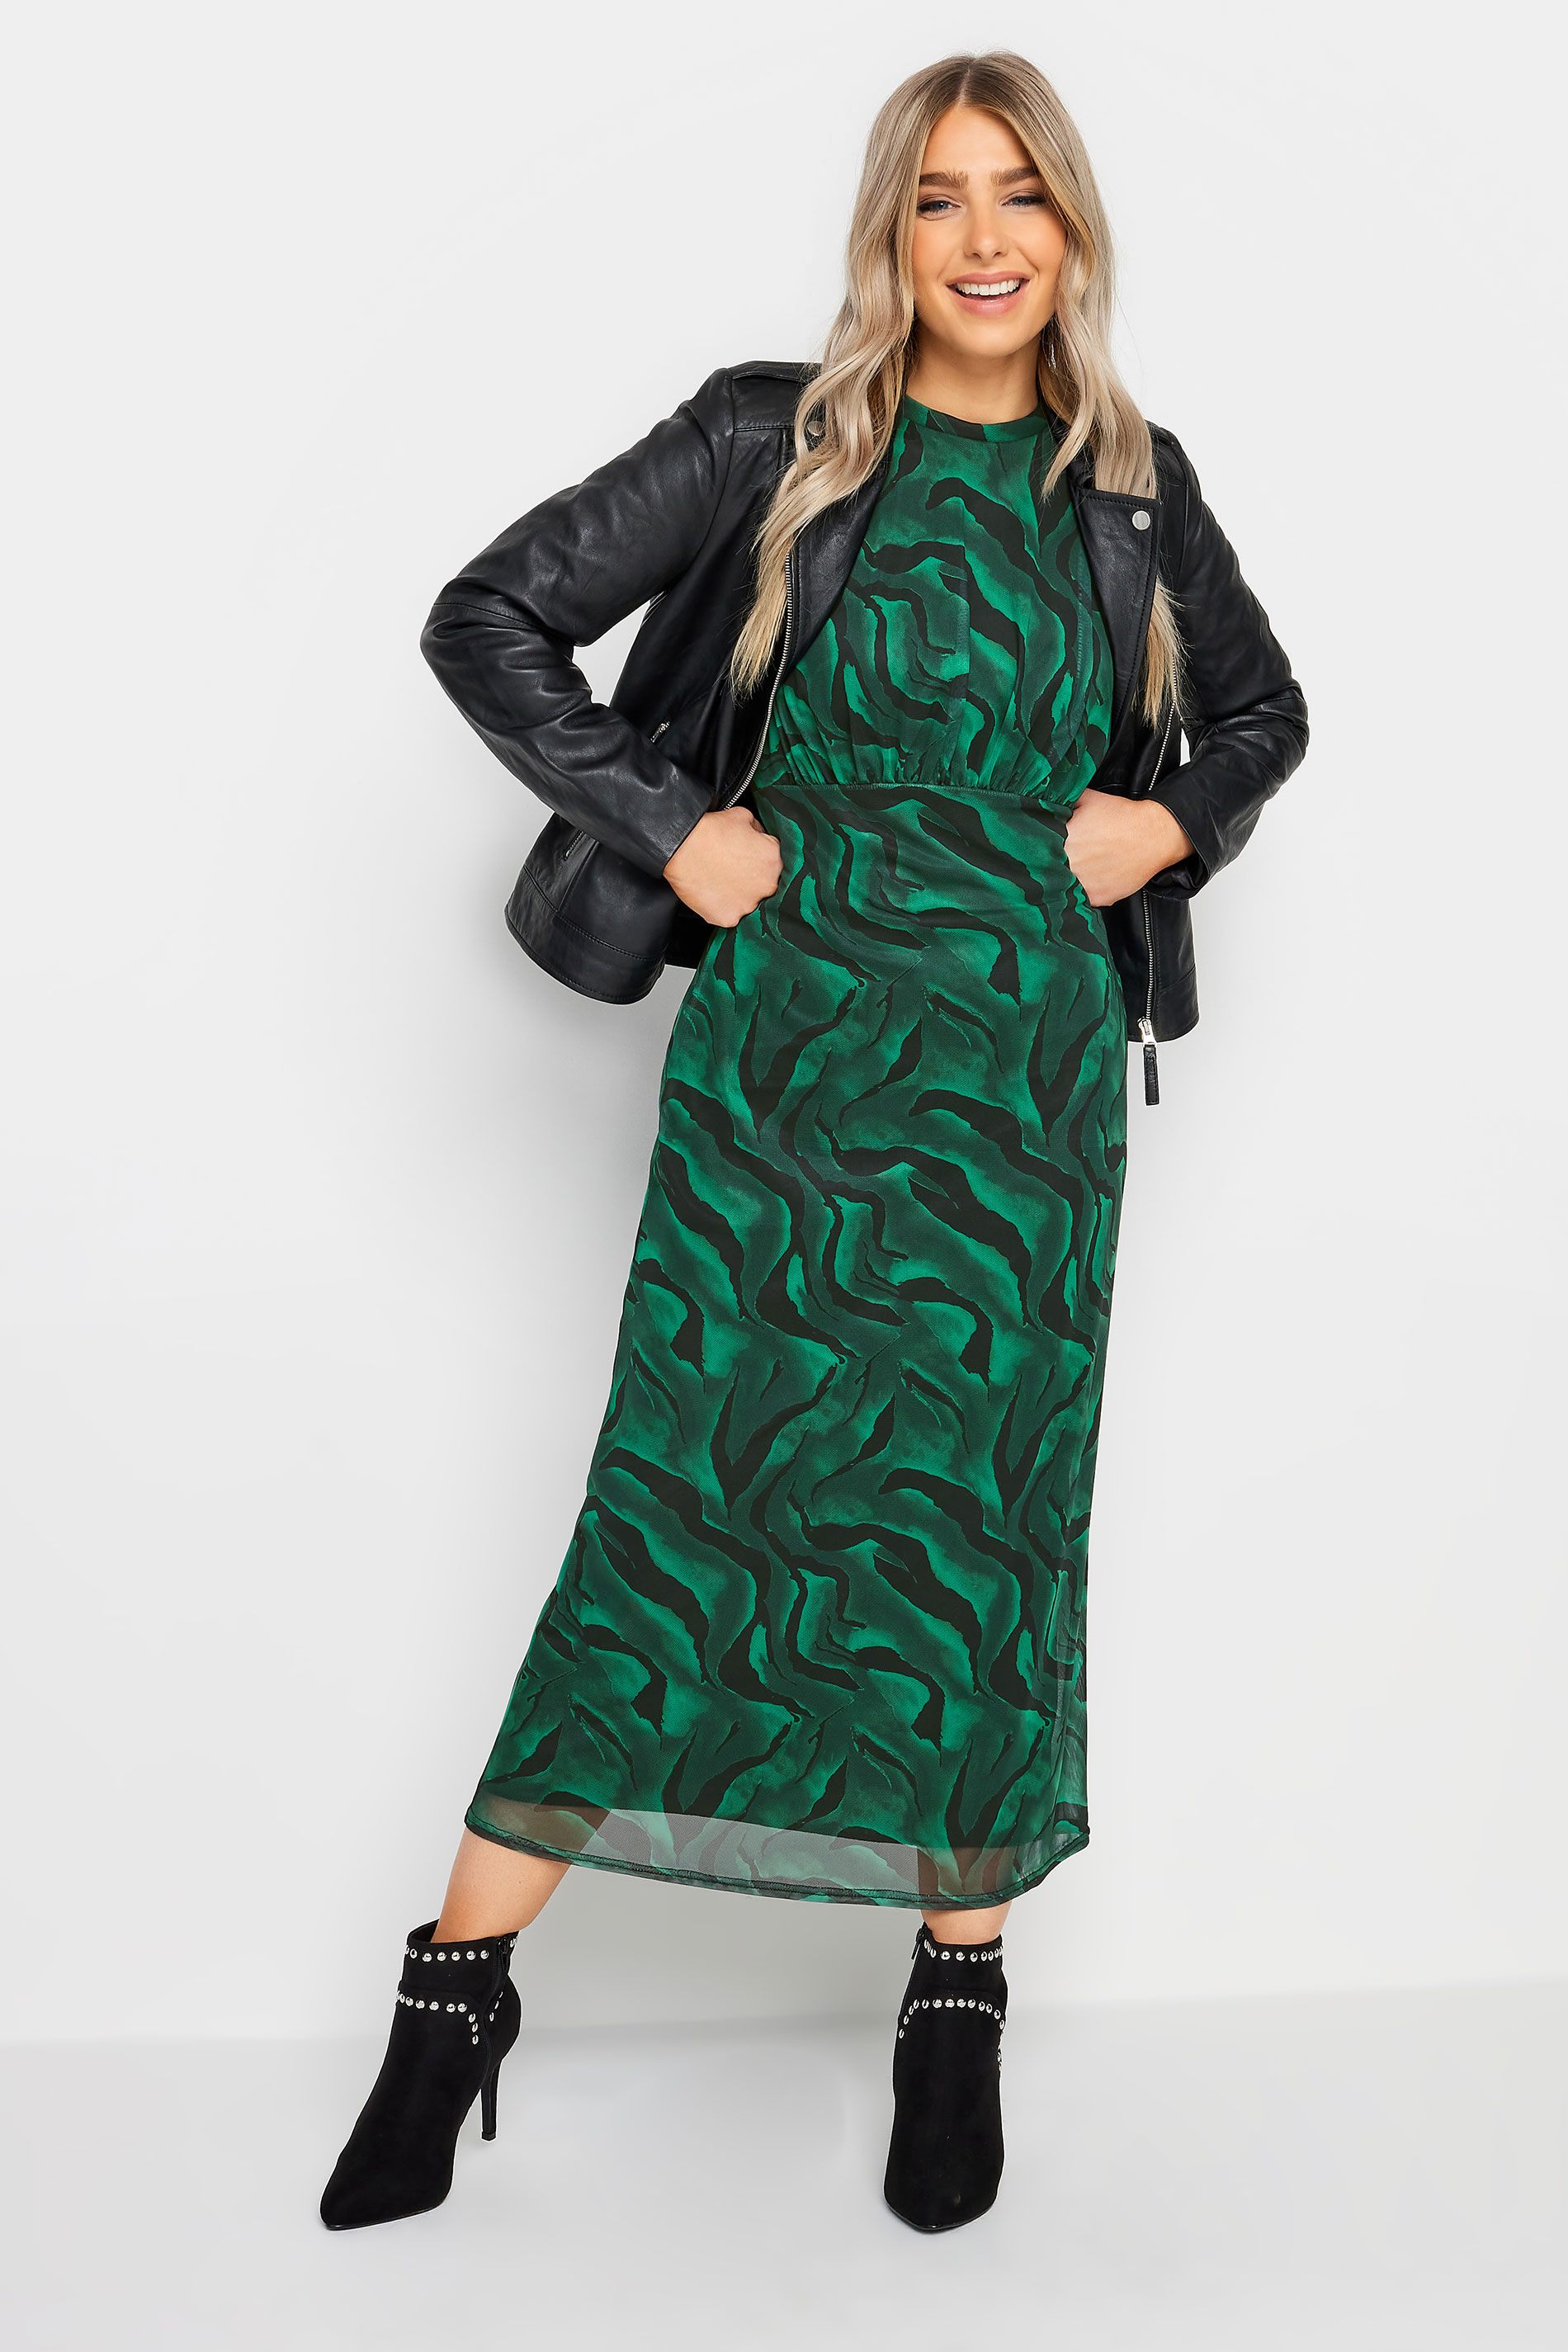 M&Co Green Abstract Print Mesh Maxi Dress | M&Co 3